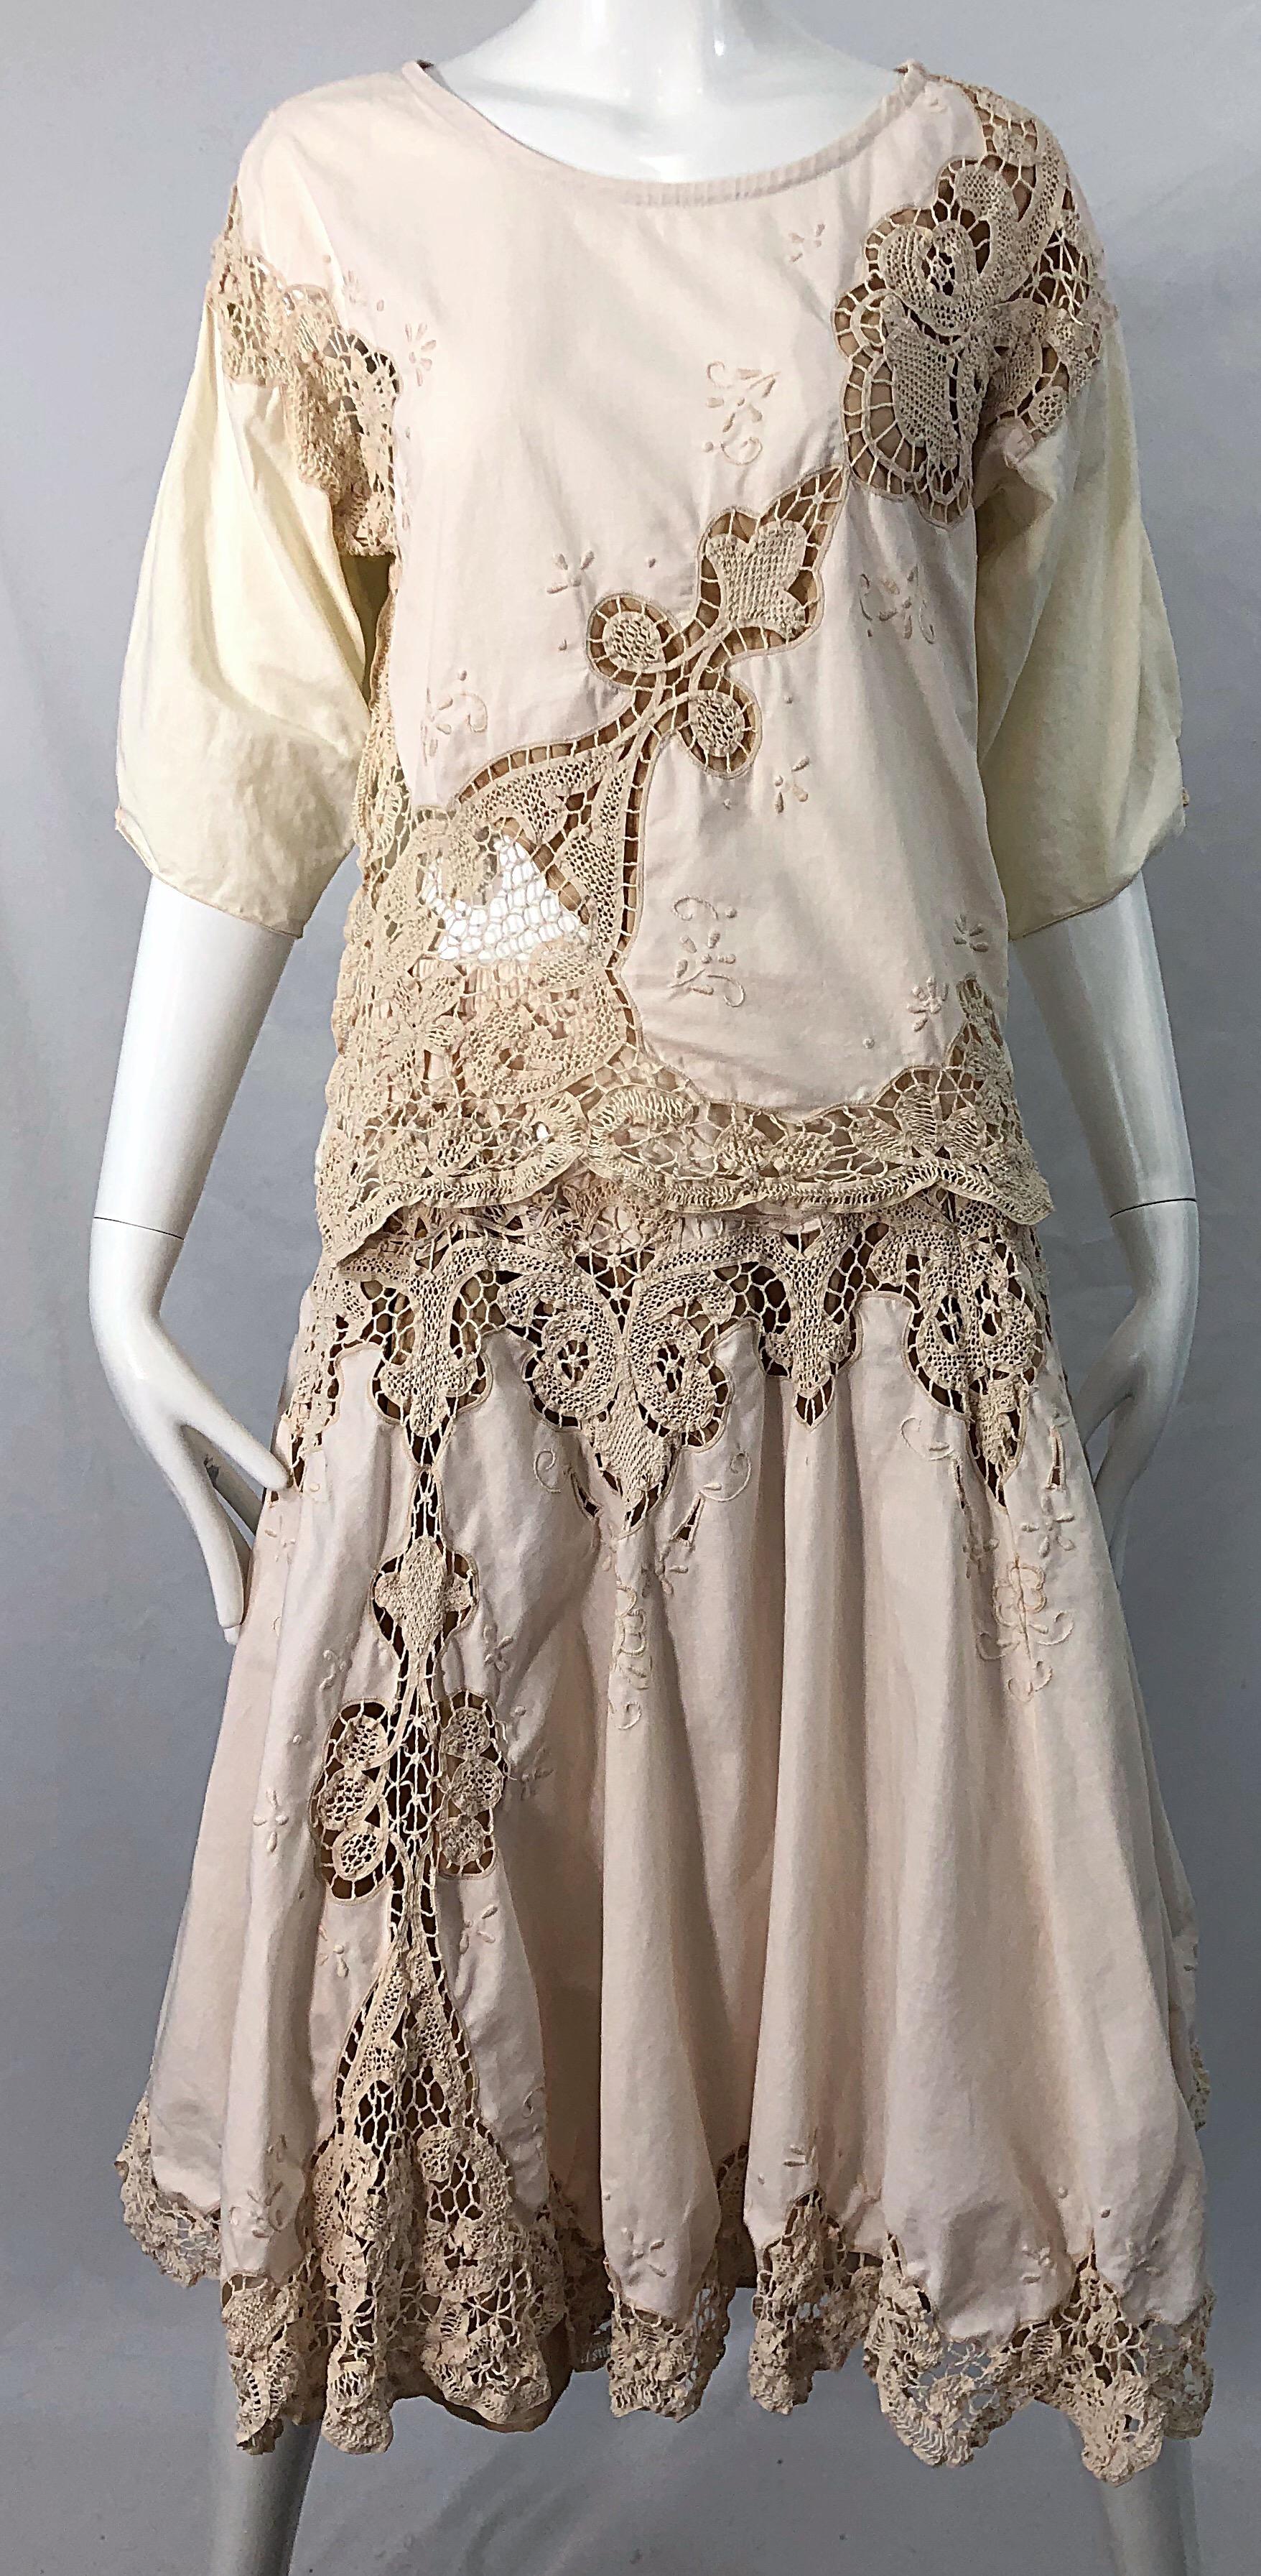 1980s Ivory Cotton Crochet Boho Shirt / Skirt Vintage 80s Dress Ensemble Set 10